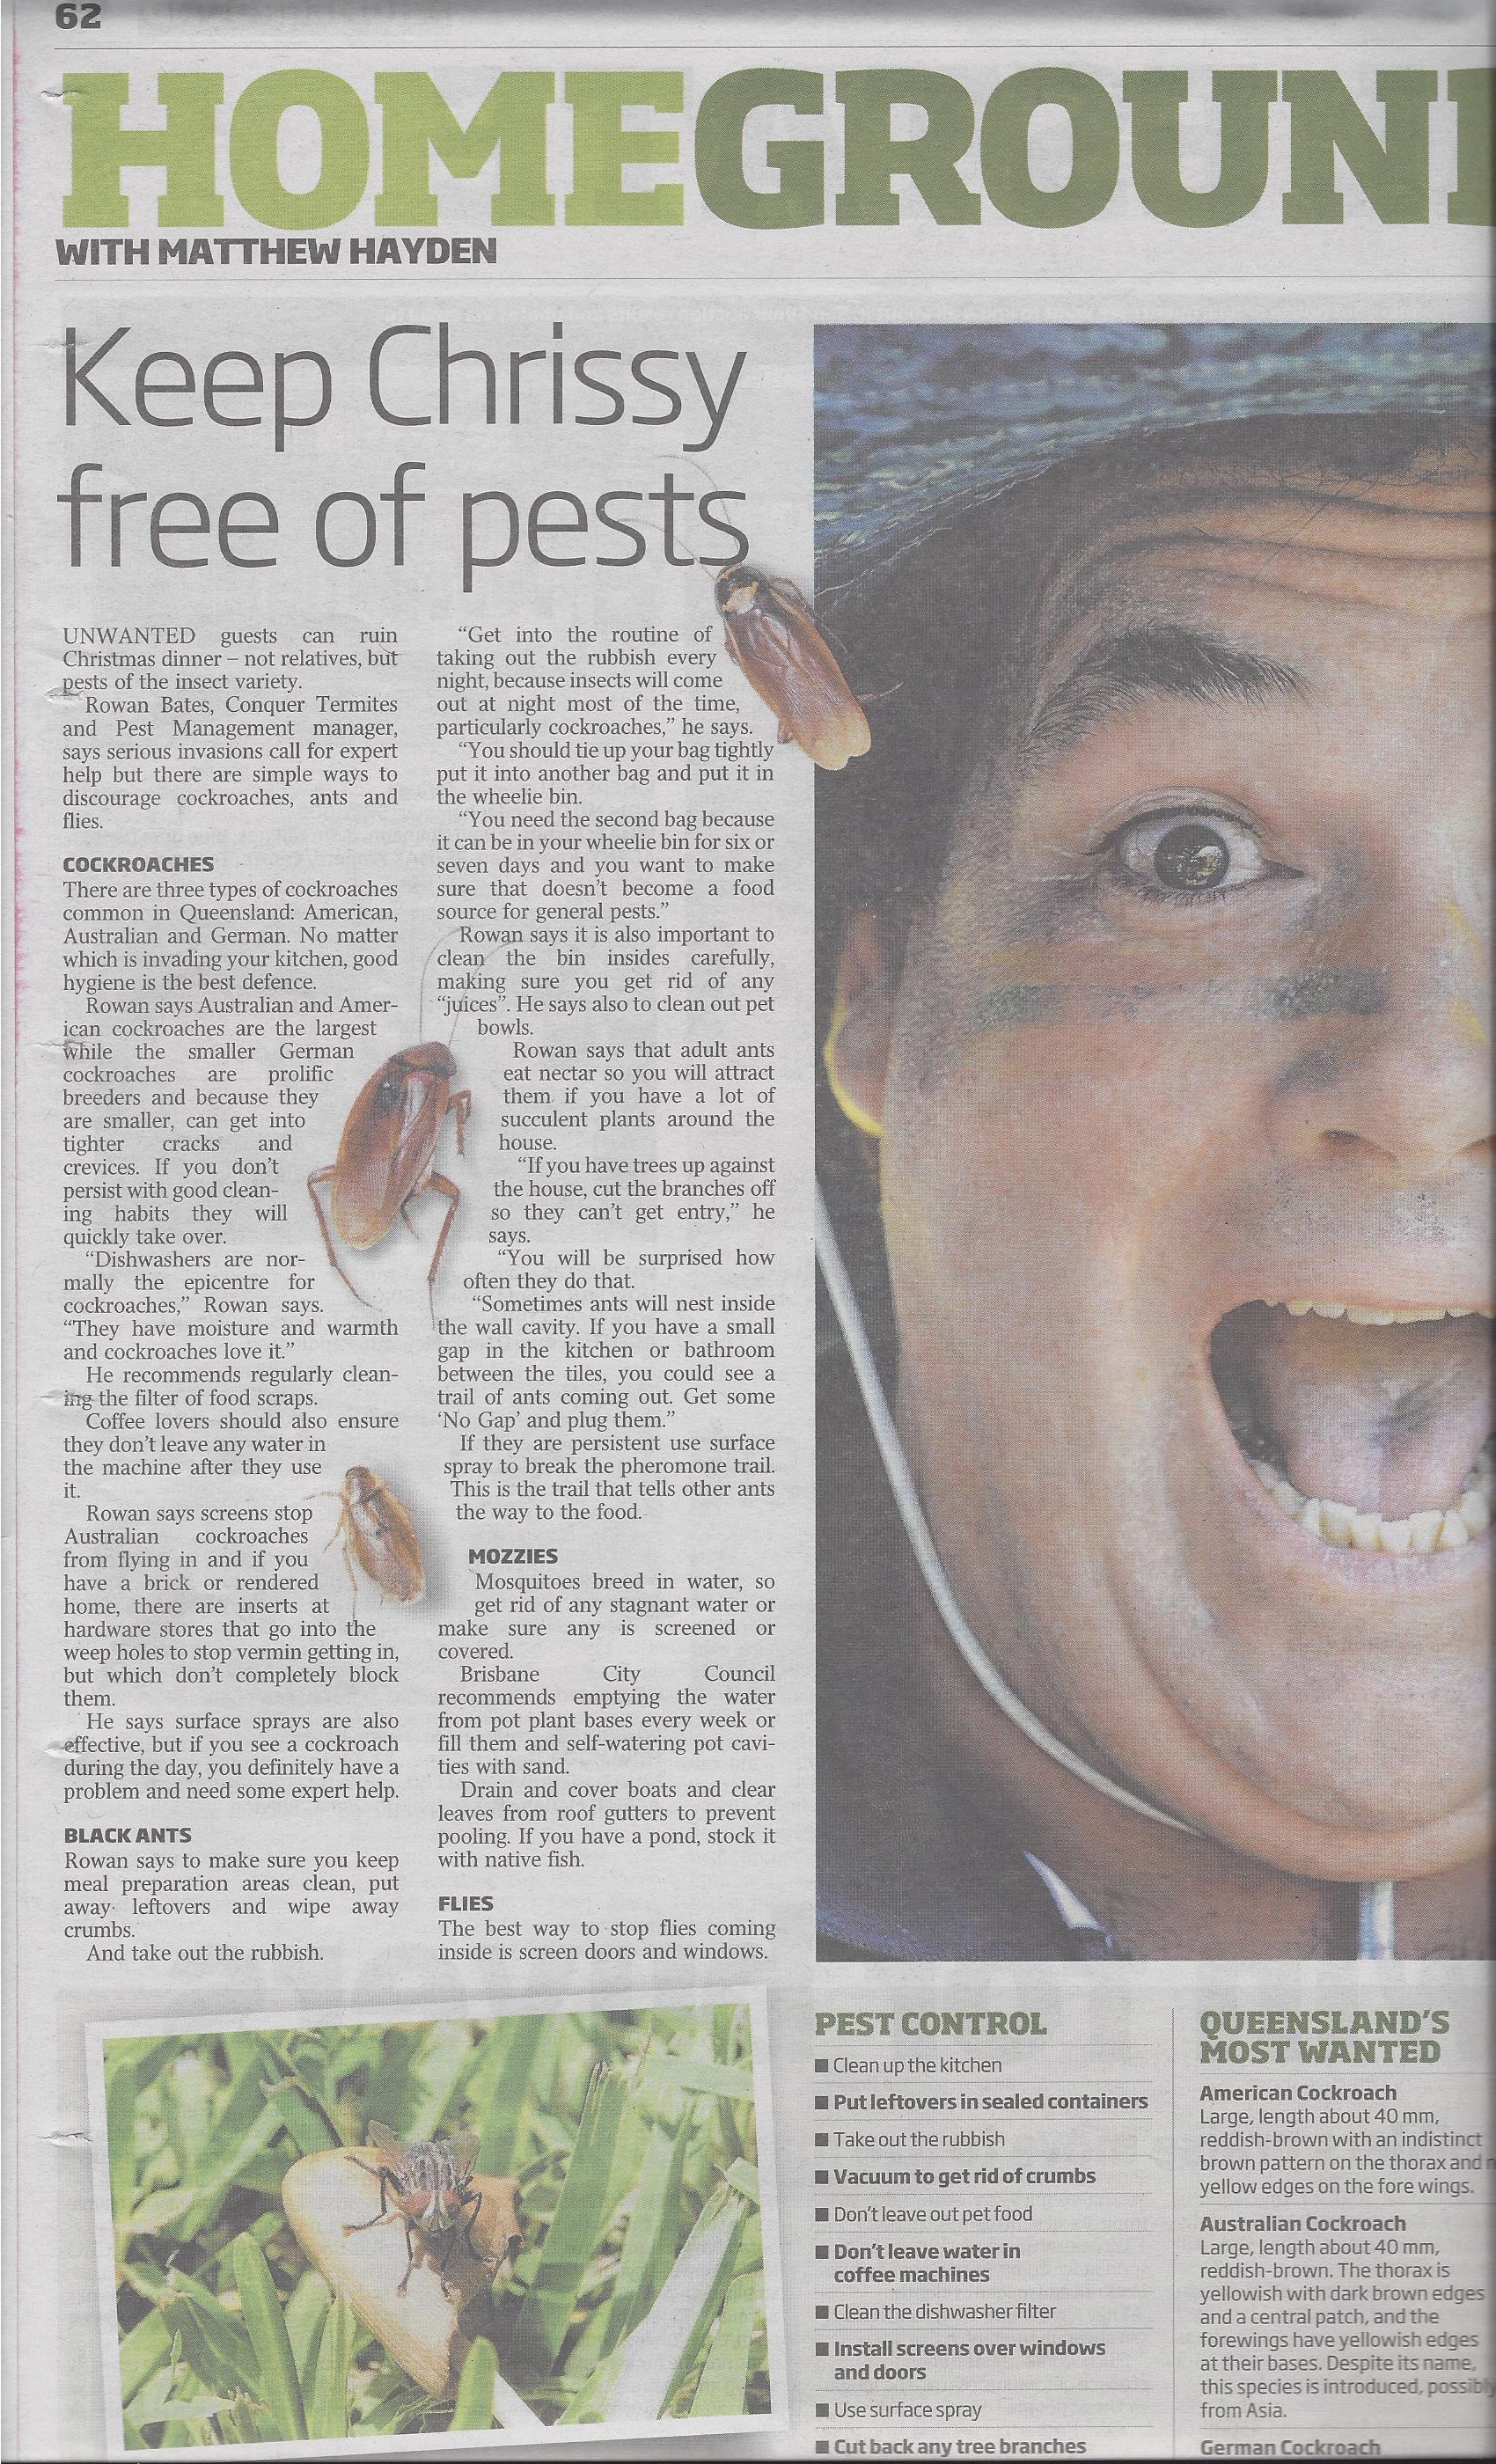 Sunday Mail article 23 Dec 2012